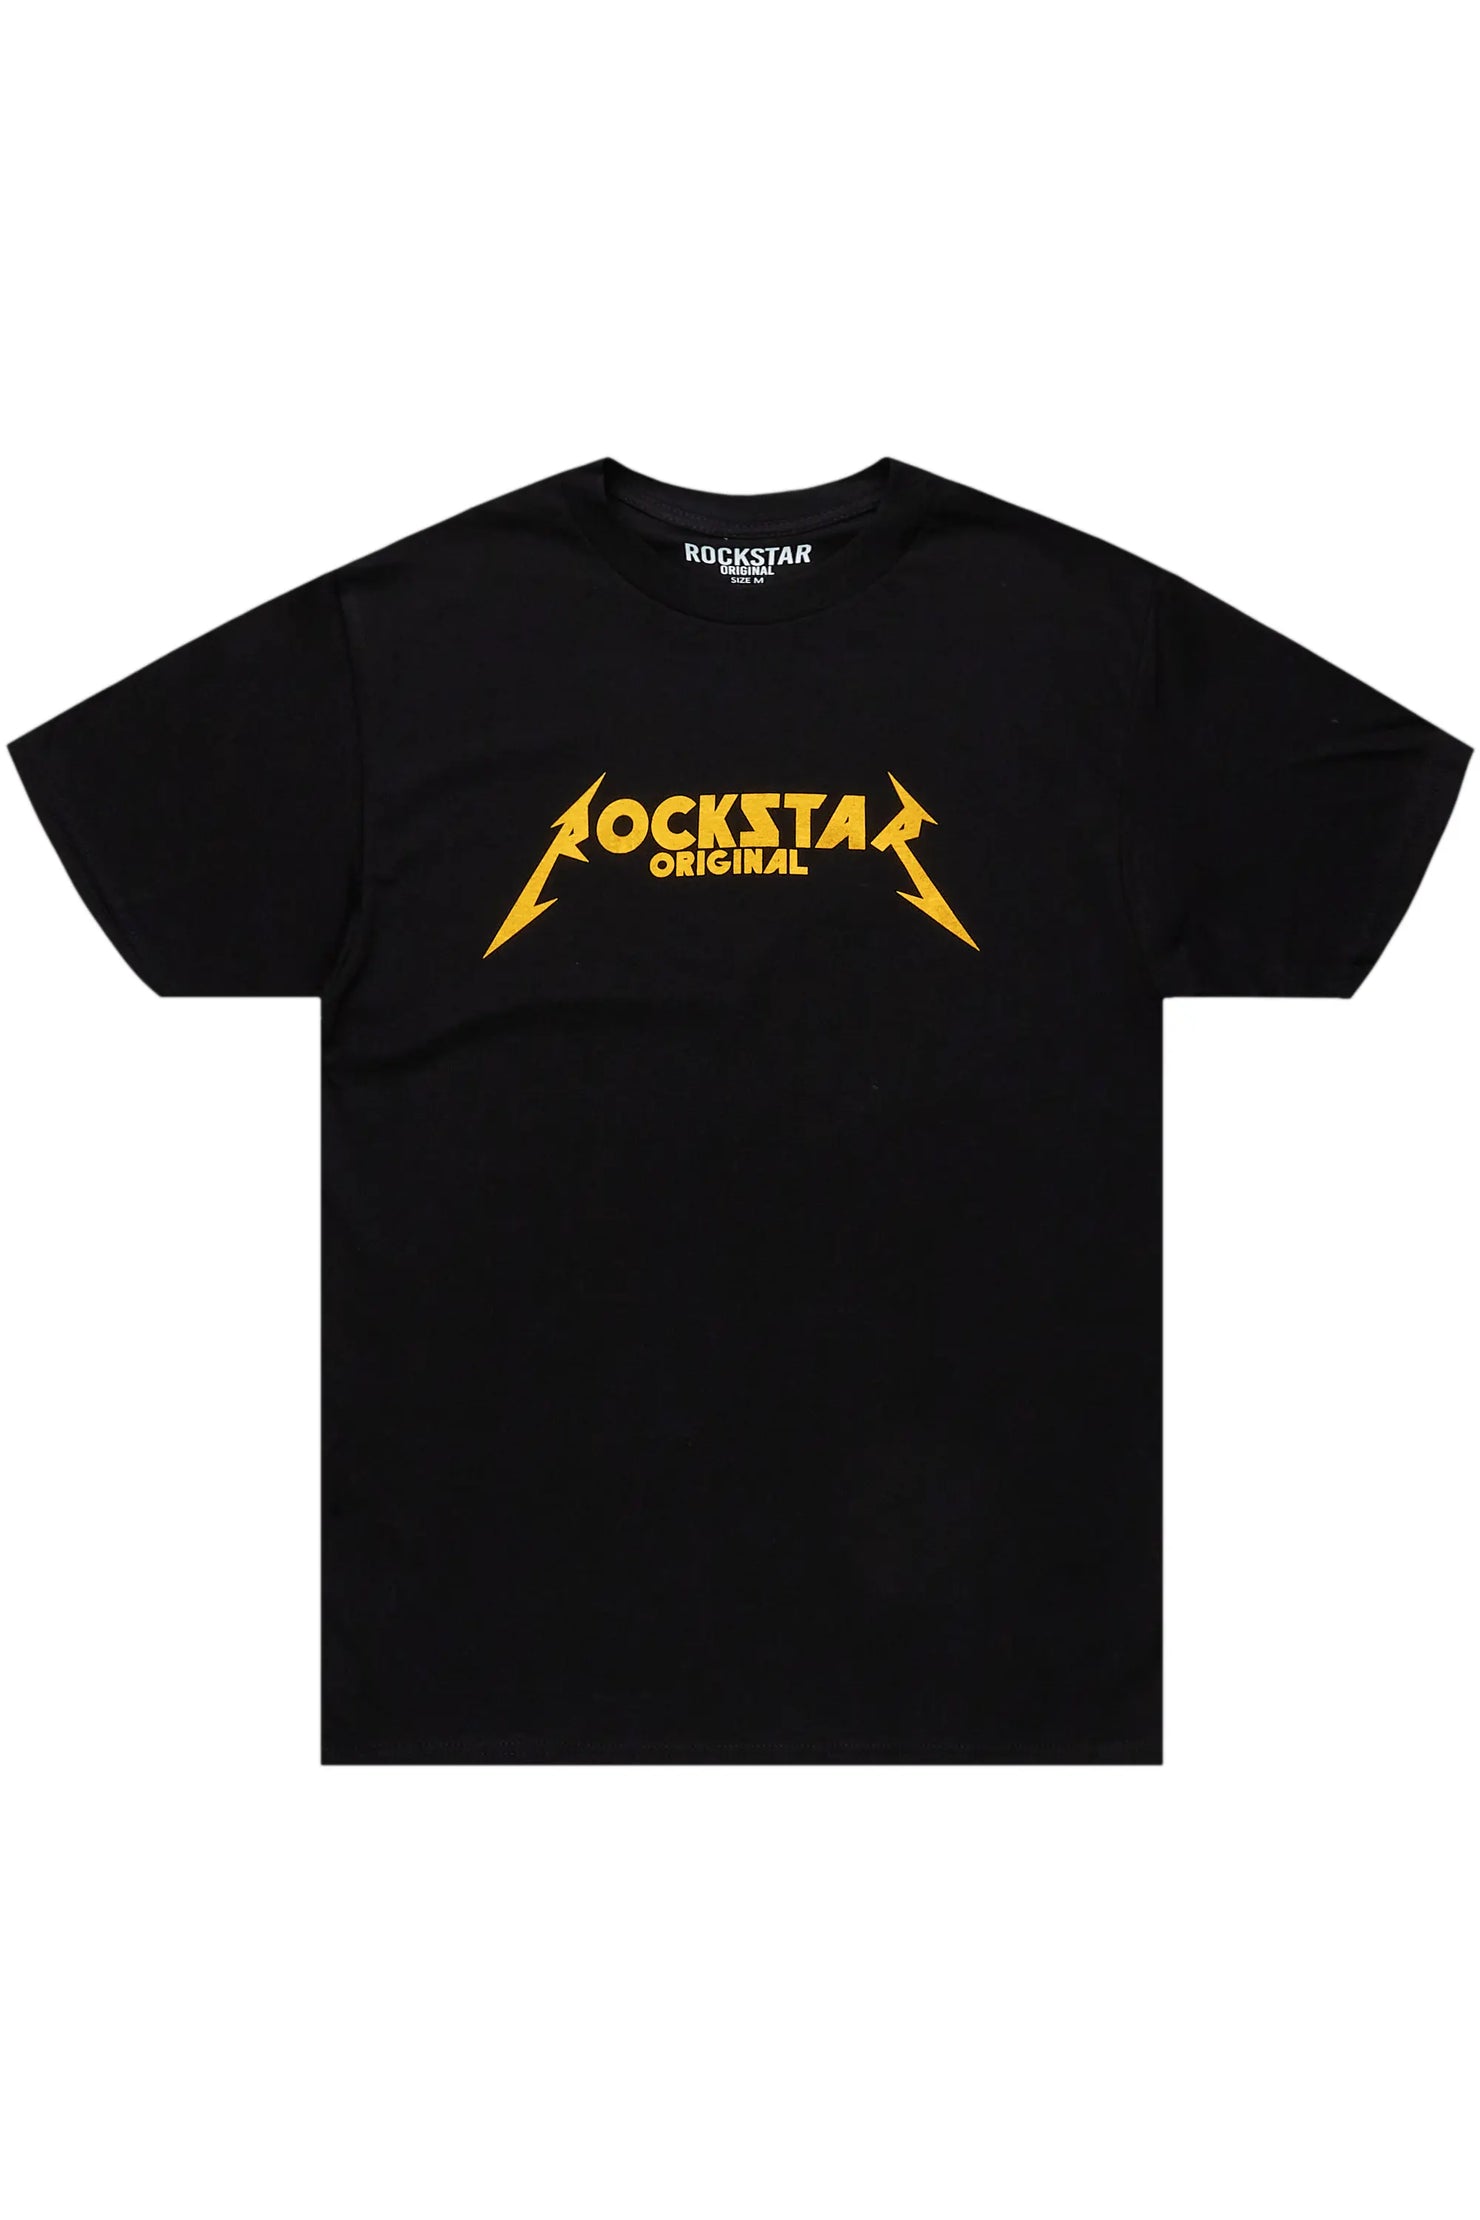 Diogo Black/Yellow Printed T-Shirt